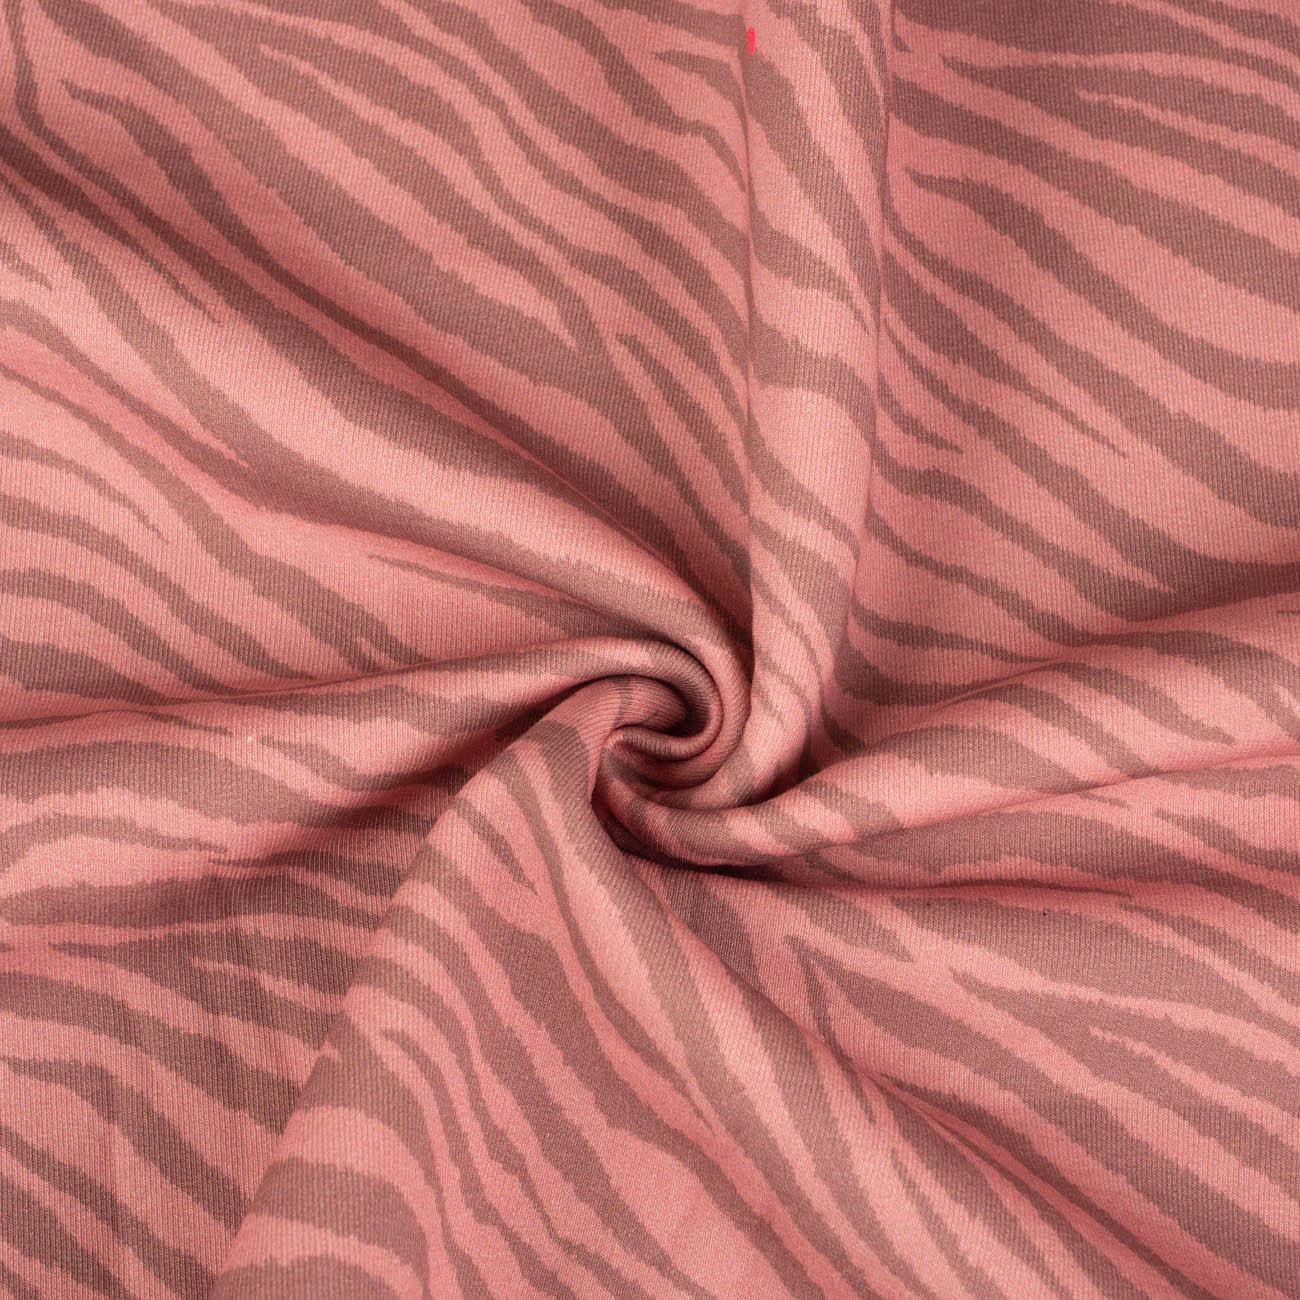 ZEBRA / quartz pink - Brushed knit